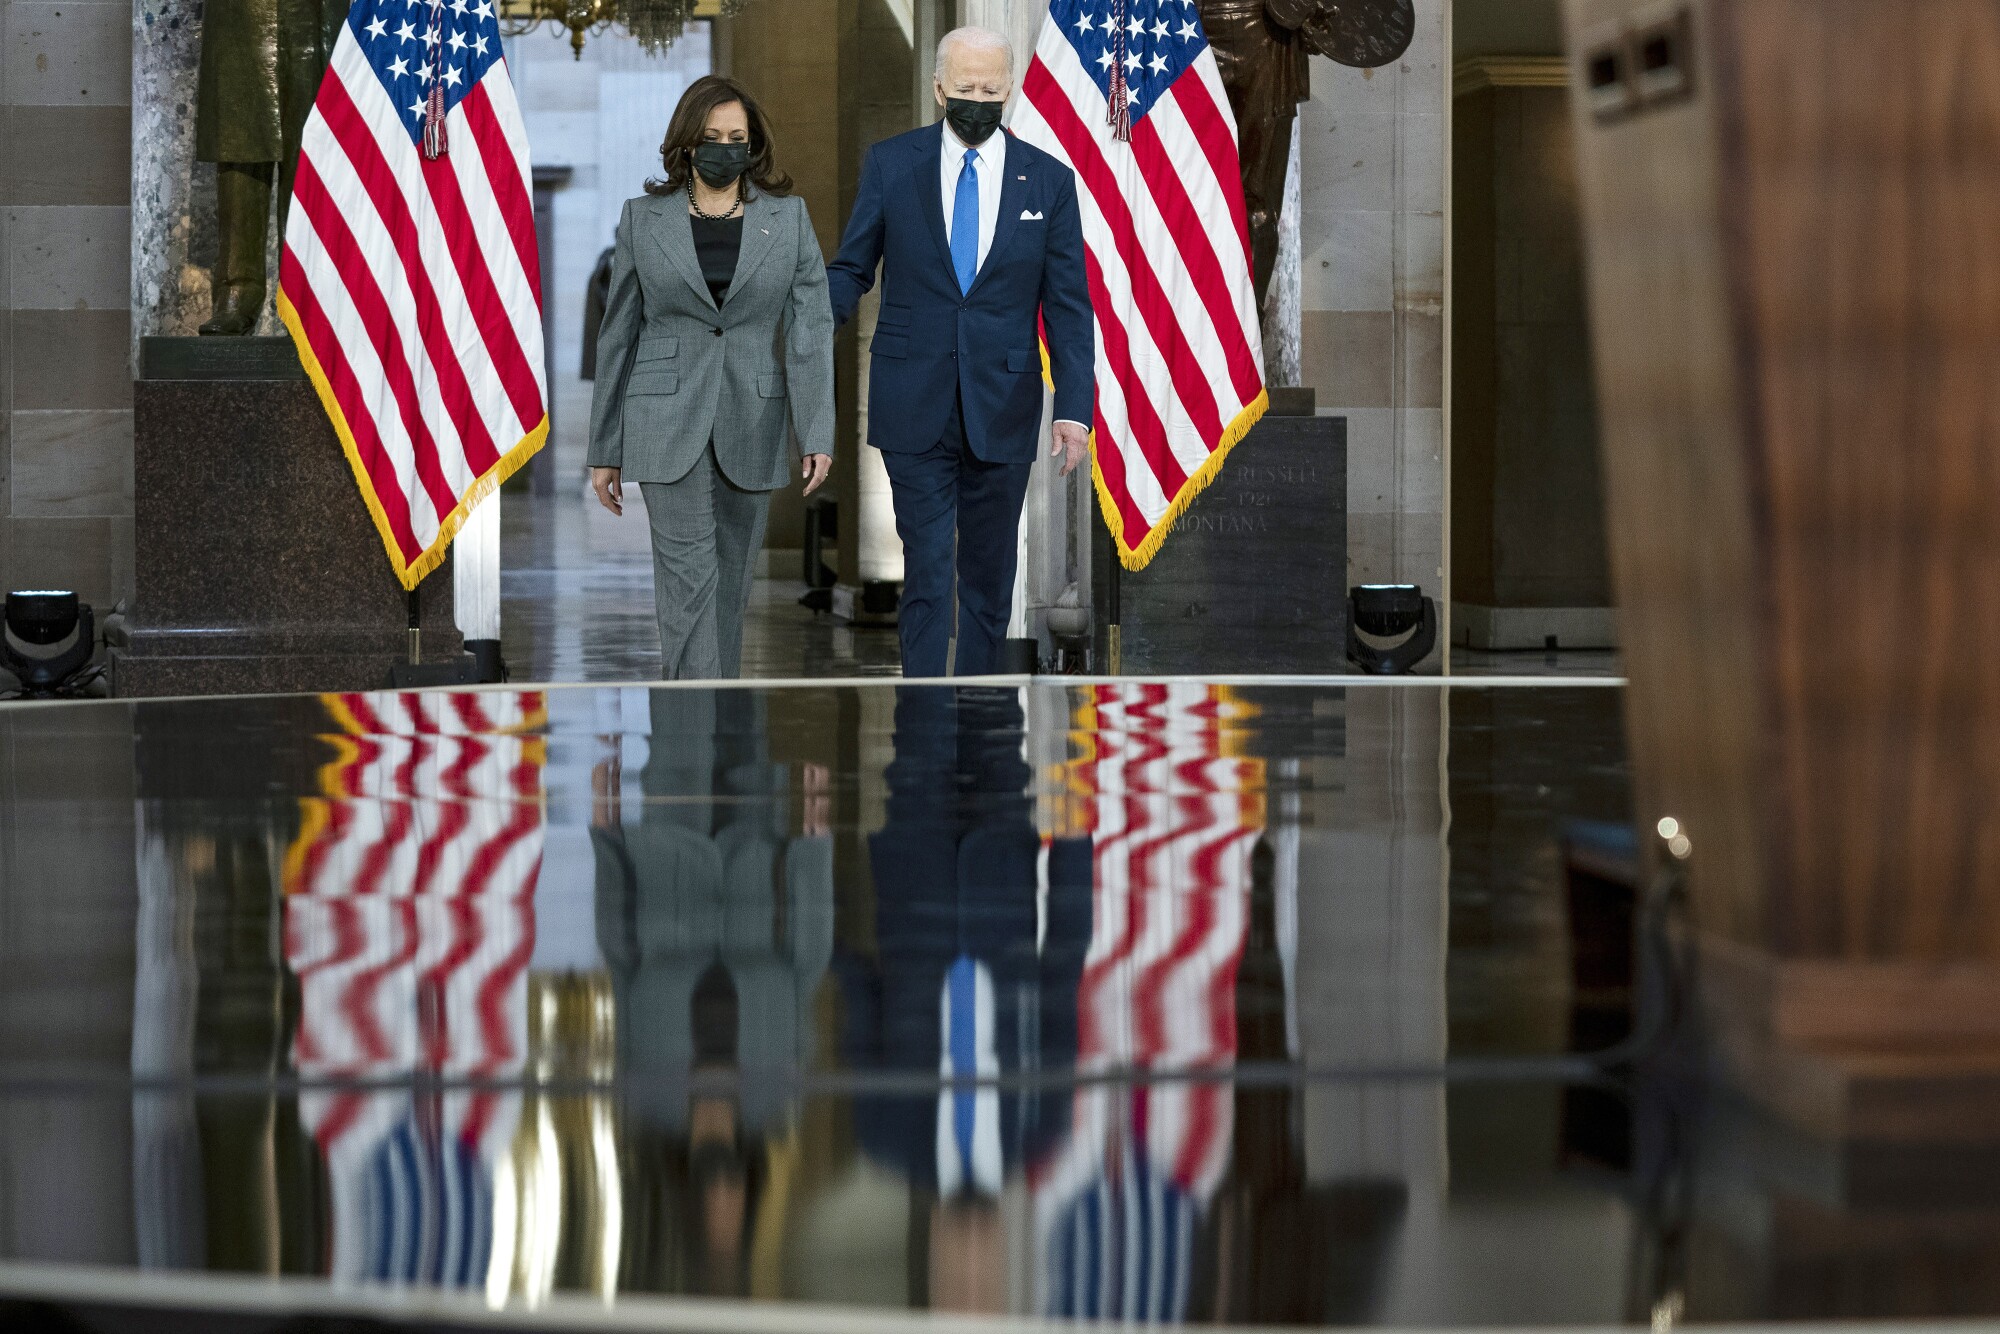 President Biden and Vice President Kamala Harris walk into Statuary Hall at the U.S. Capitol.